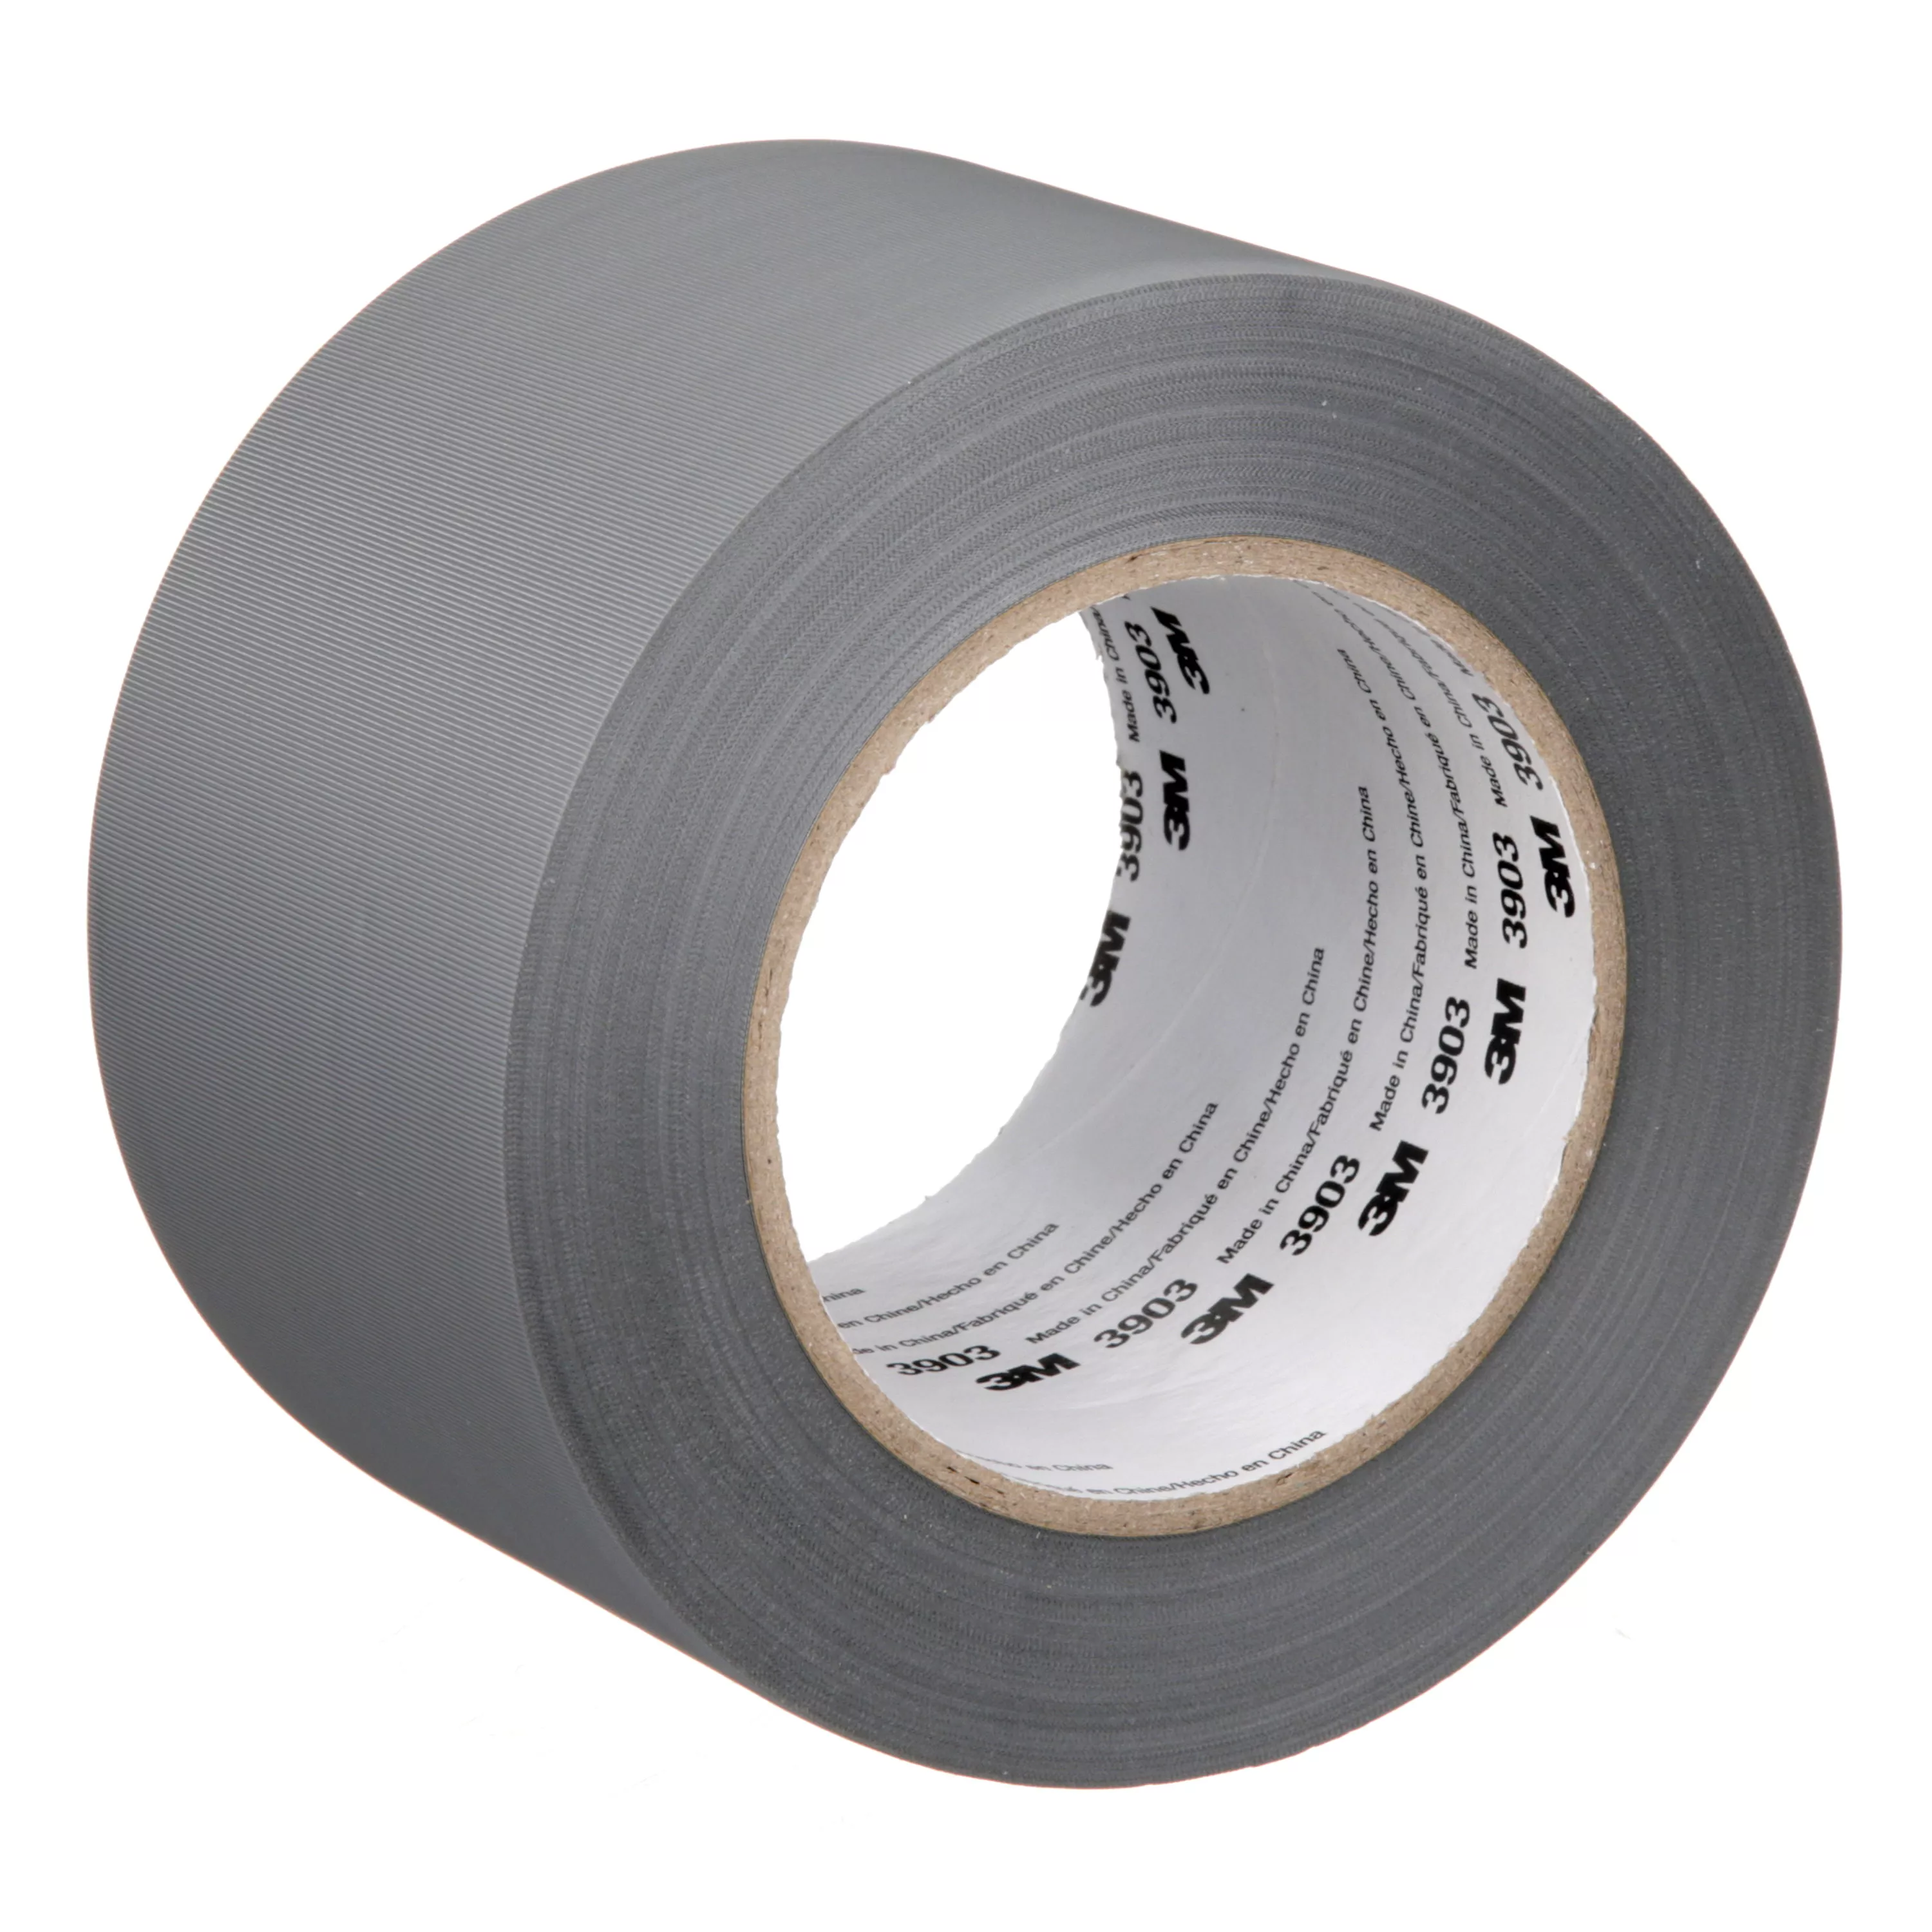 3M™ Vinyl Duct Tape 3903, Gray, 3 in x 50 yd, 6.5 mil, 18 Rolls/Case,